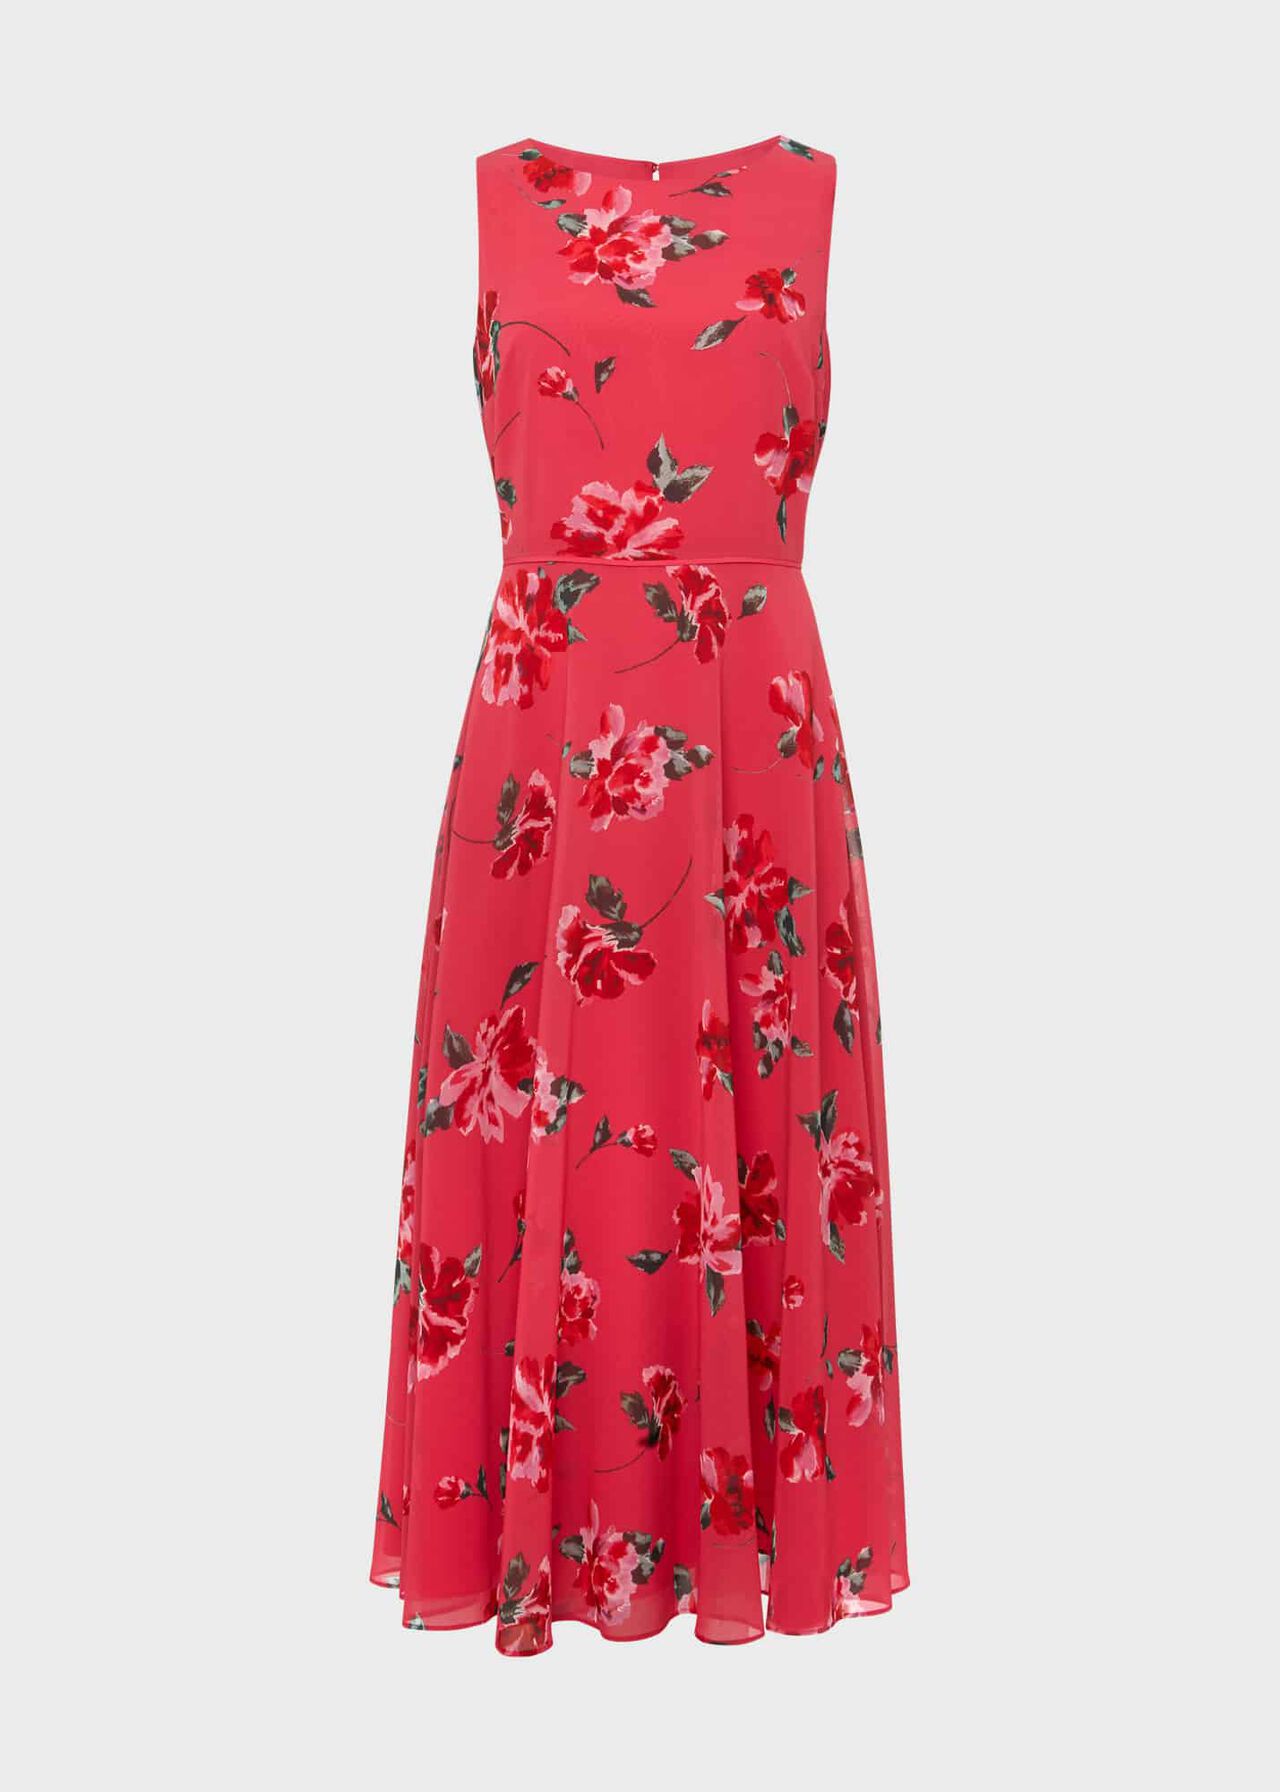 Carly Floral Midi Dress, Pink Red Multi, hi-res